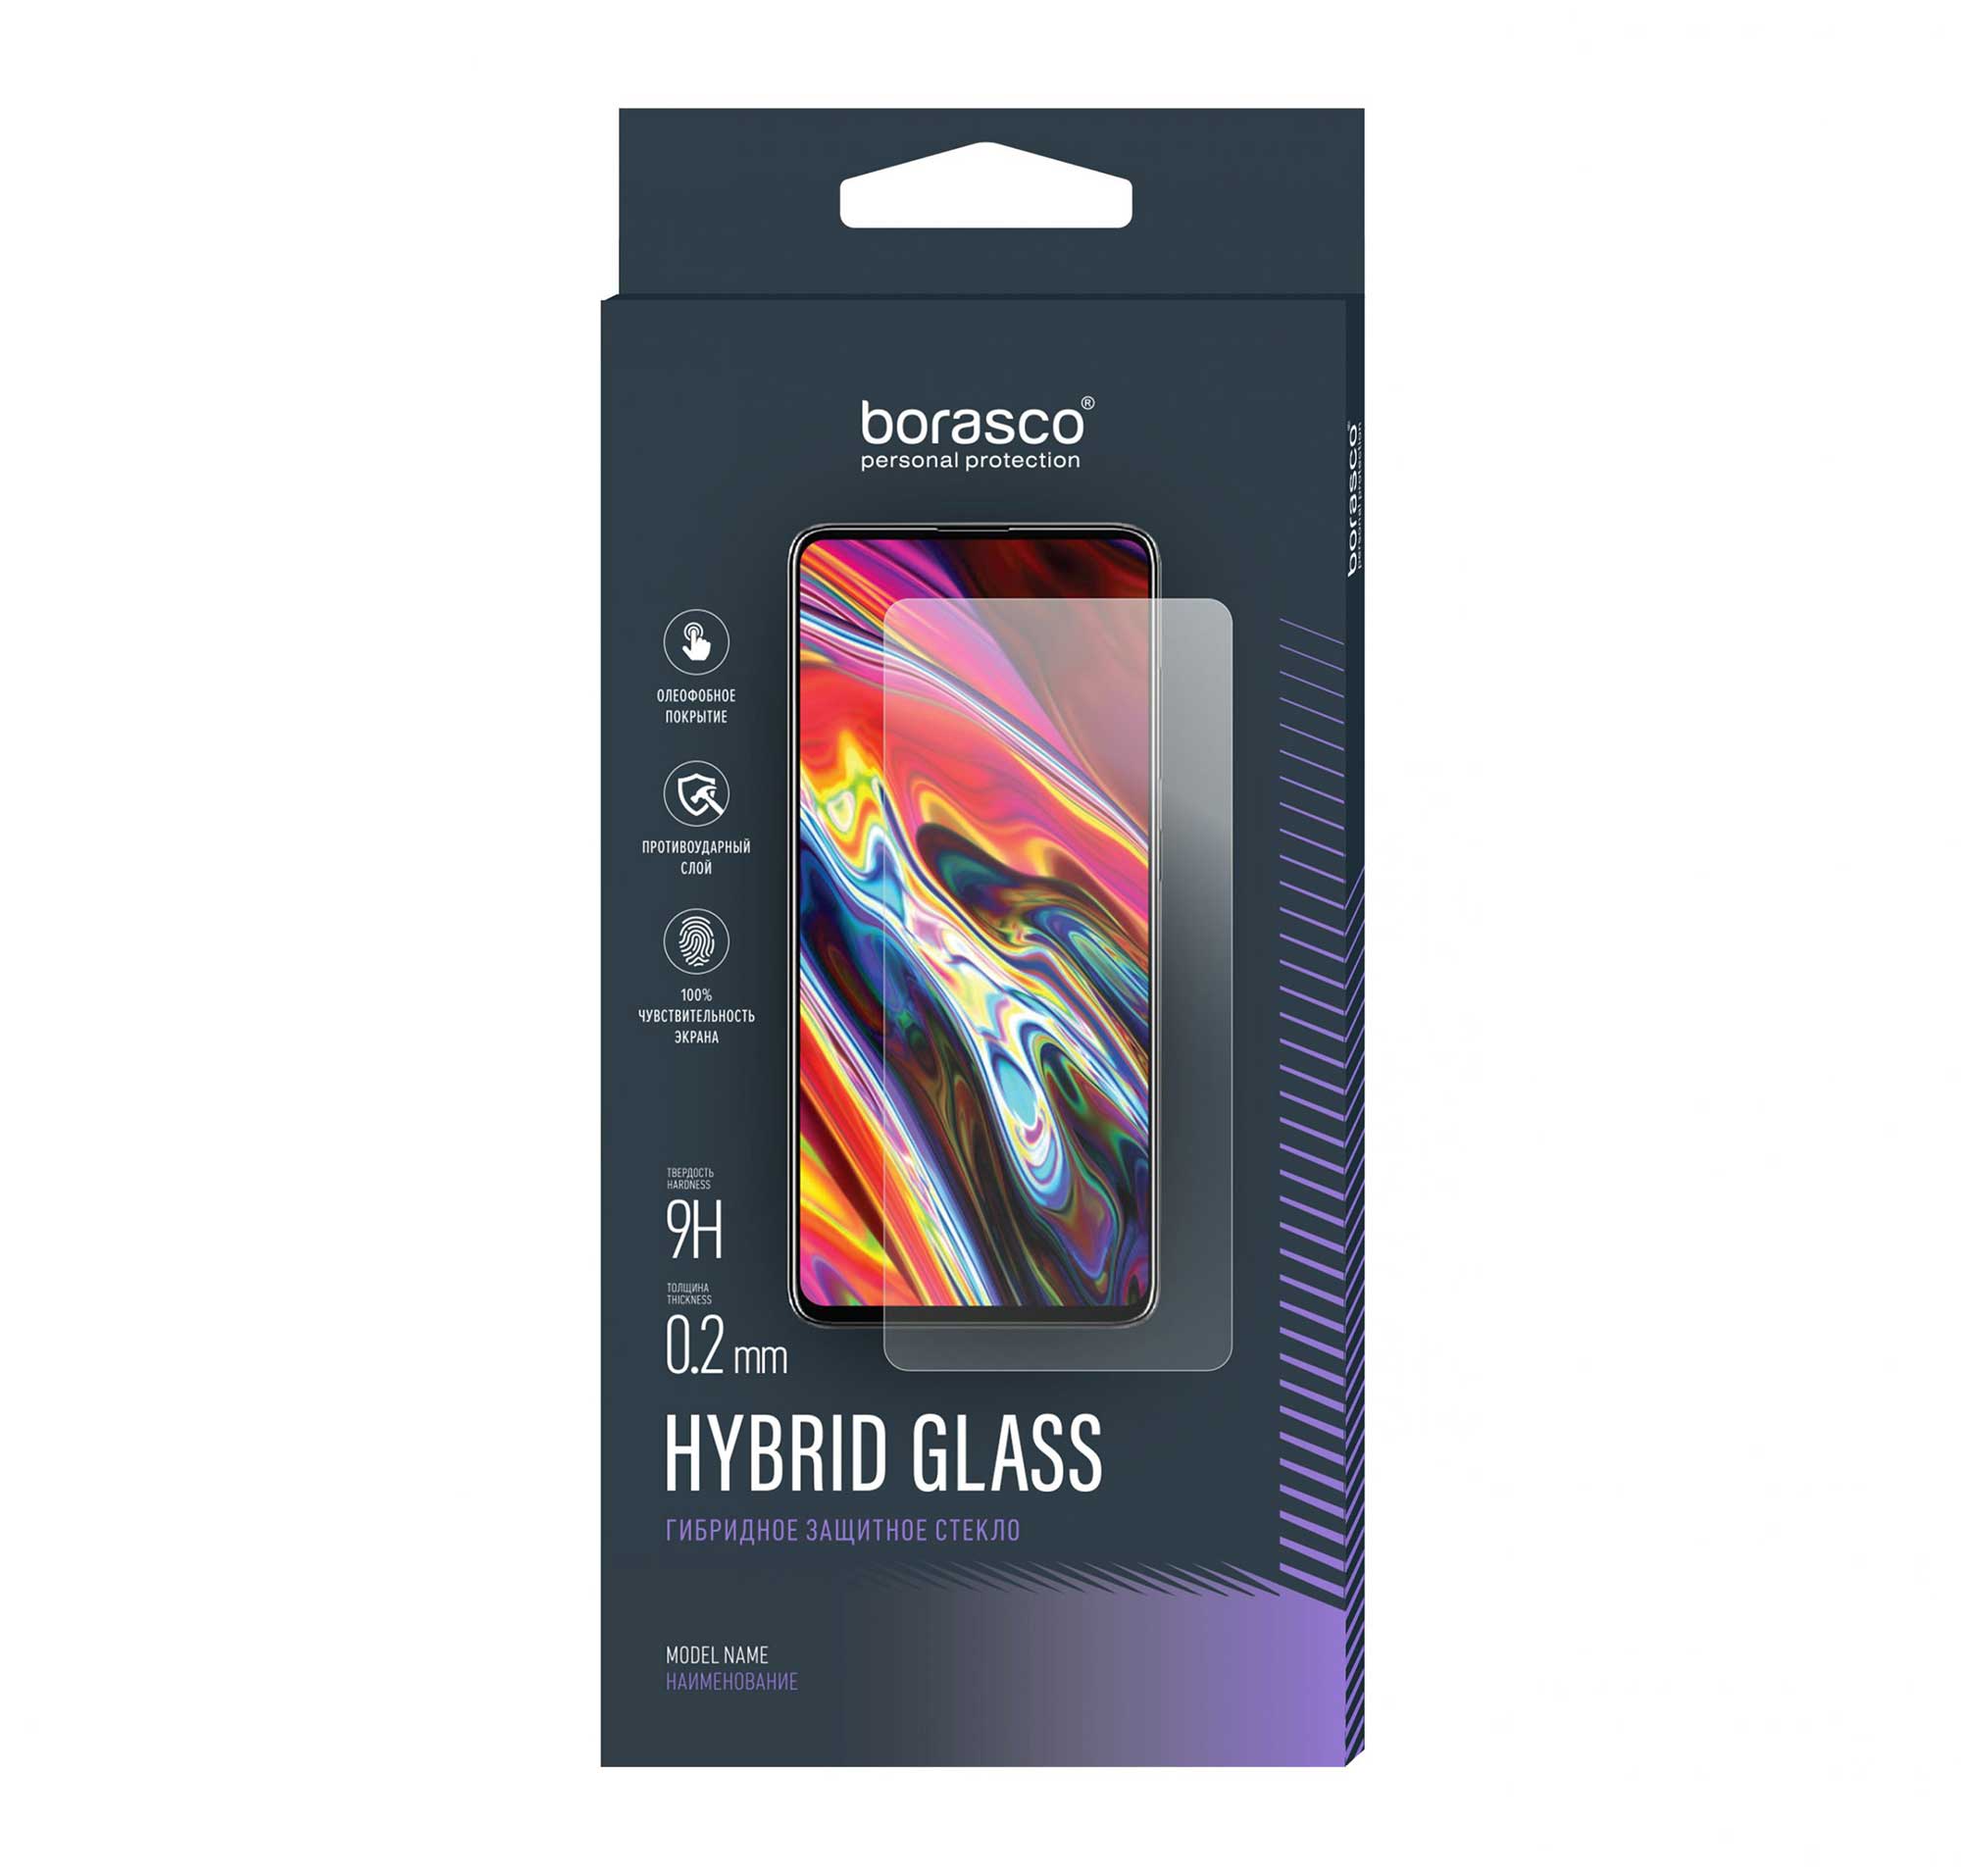 Защитное стекло Hybrid Glass для OPPO A53 защитное стекло hybrid glass для umidigi bison 2